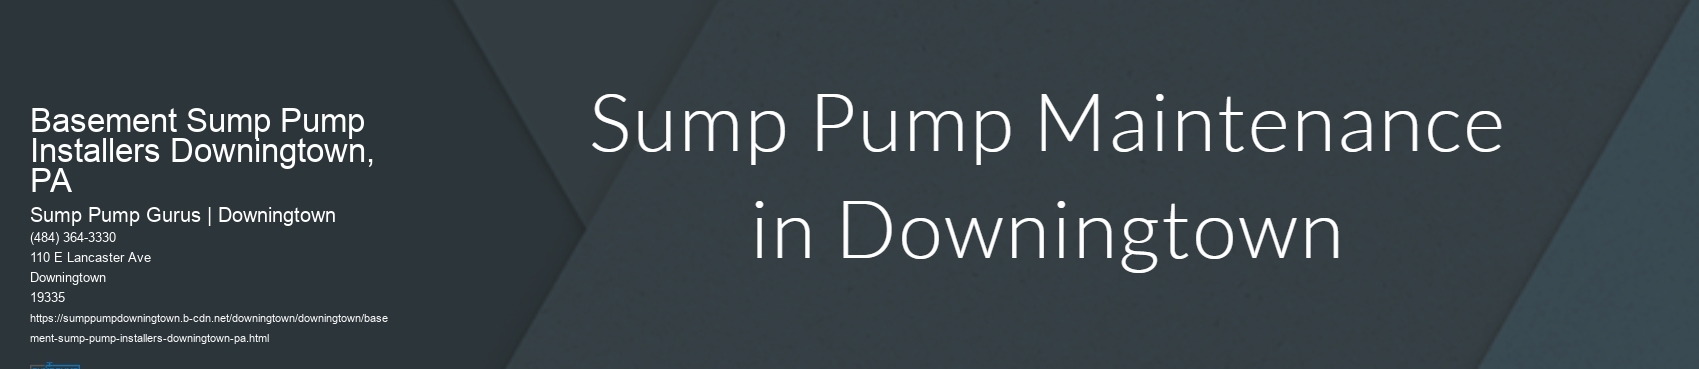 Basement Sump Pump Installers Downingtown, PA